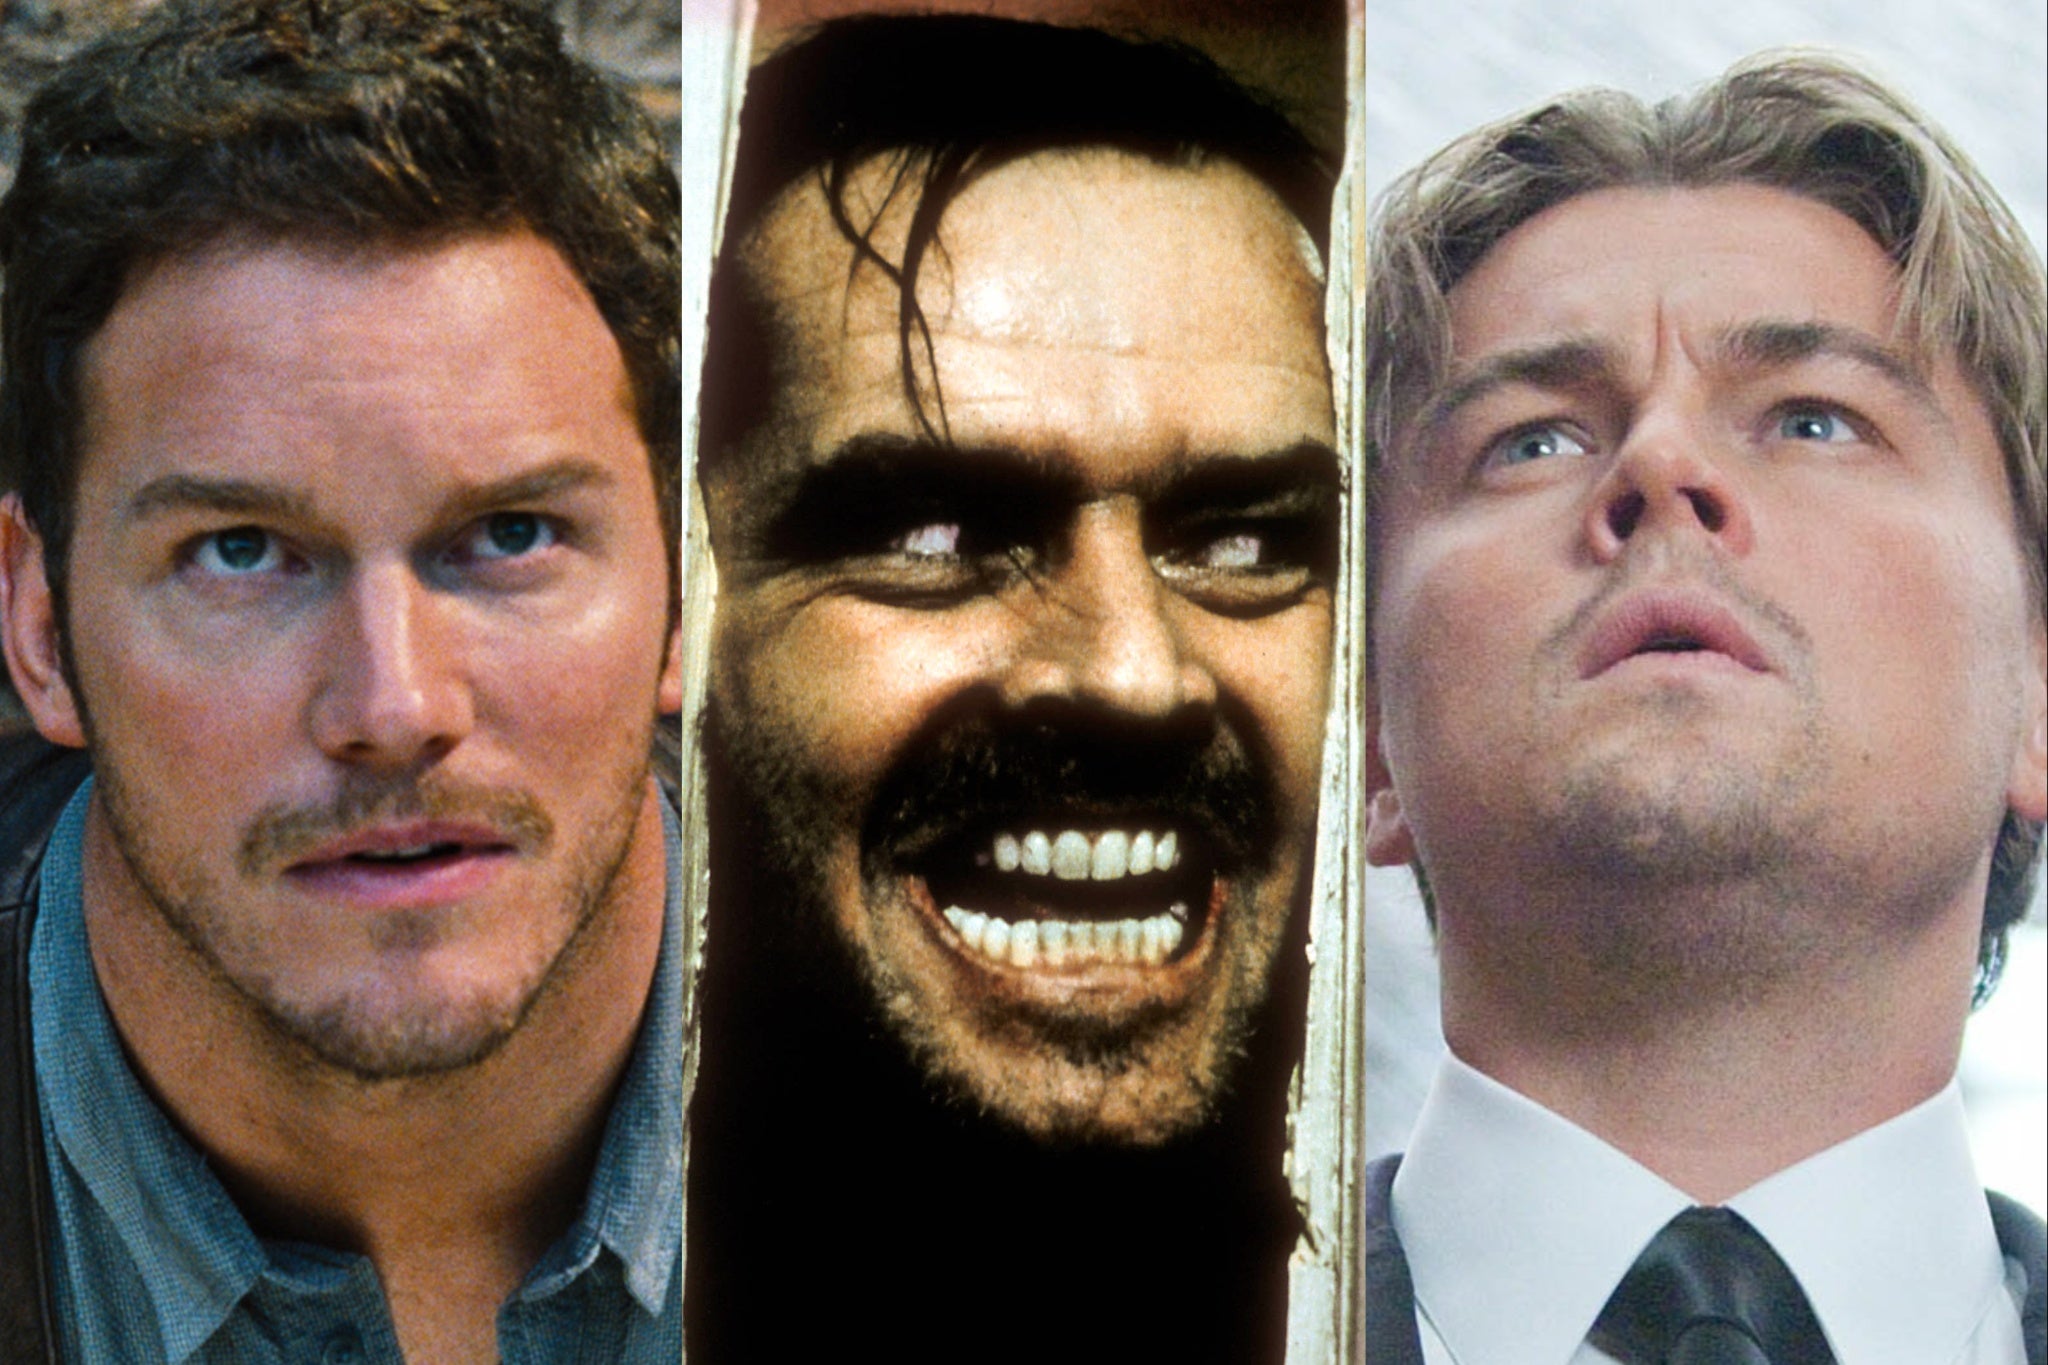 Chris Pratt in ‘Jurassic World’, Jack Nicholson in ‘The Shining’ and Leonardo DiCaprio in ‘Inception'